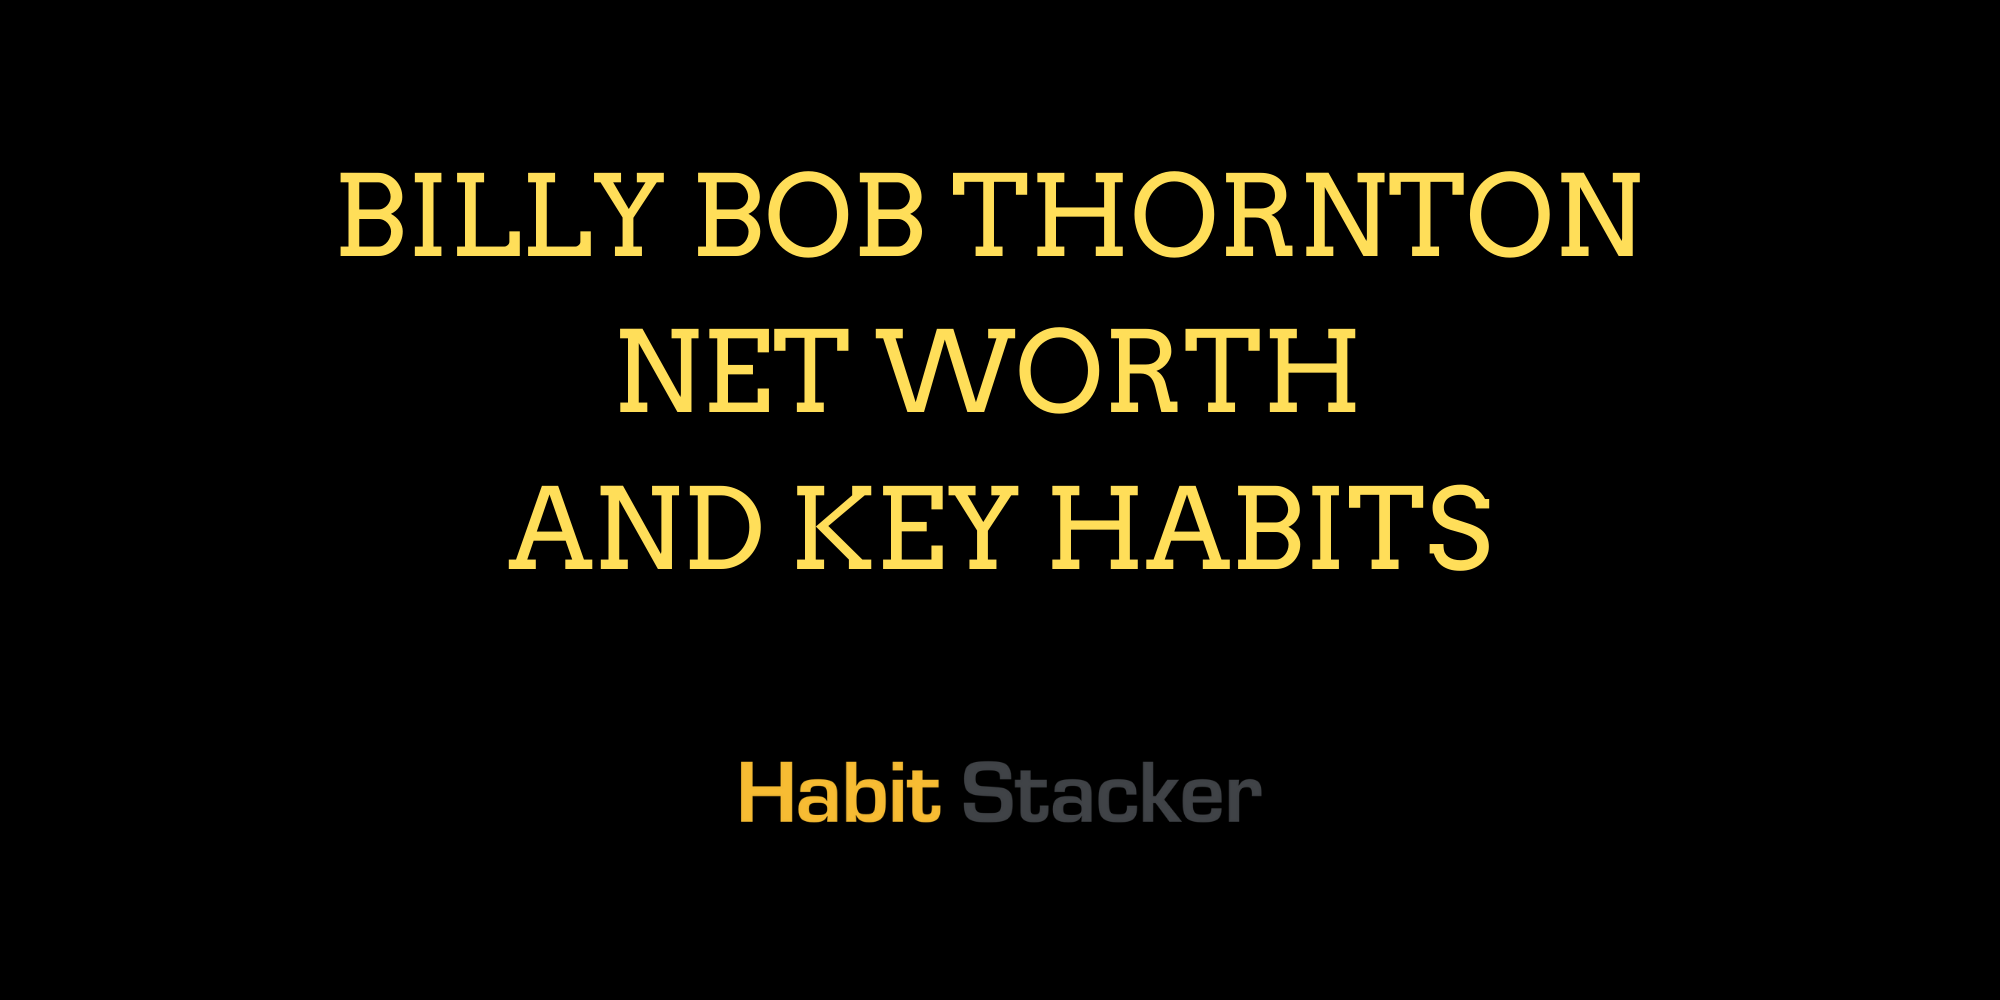 Billy Bob Thornton Net Worth and Key Habits